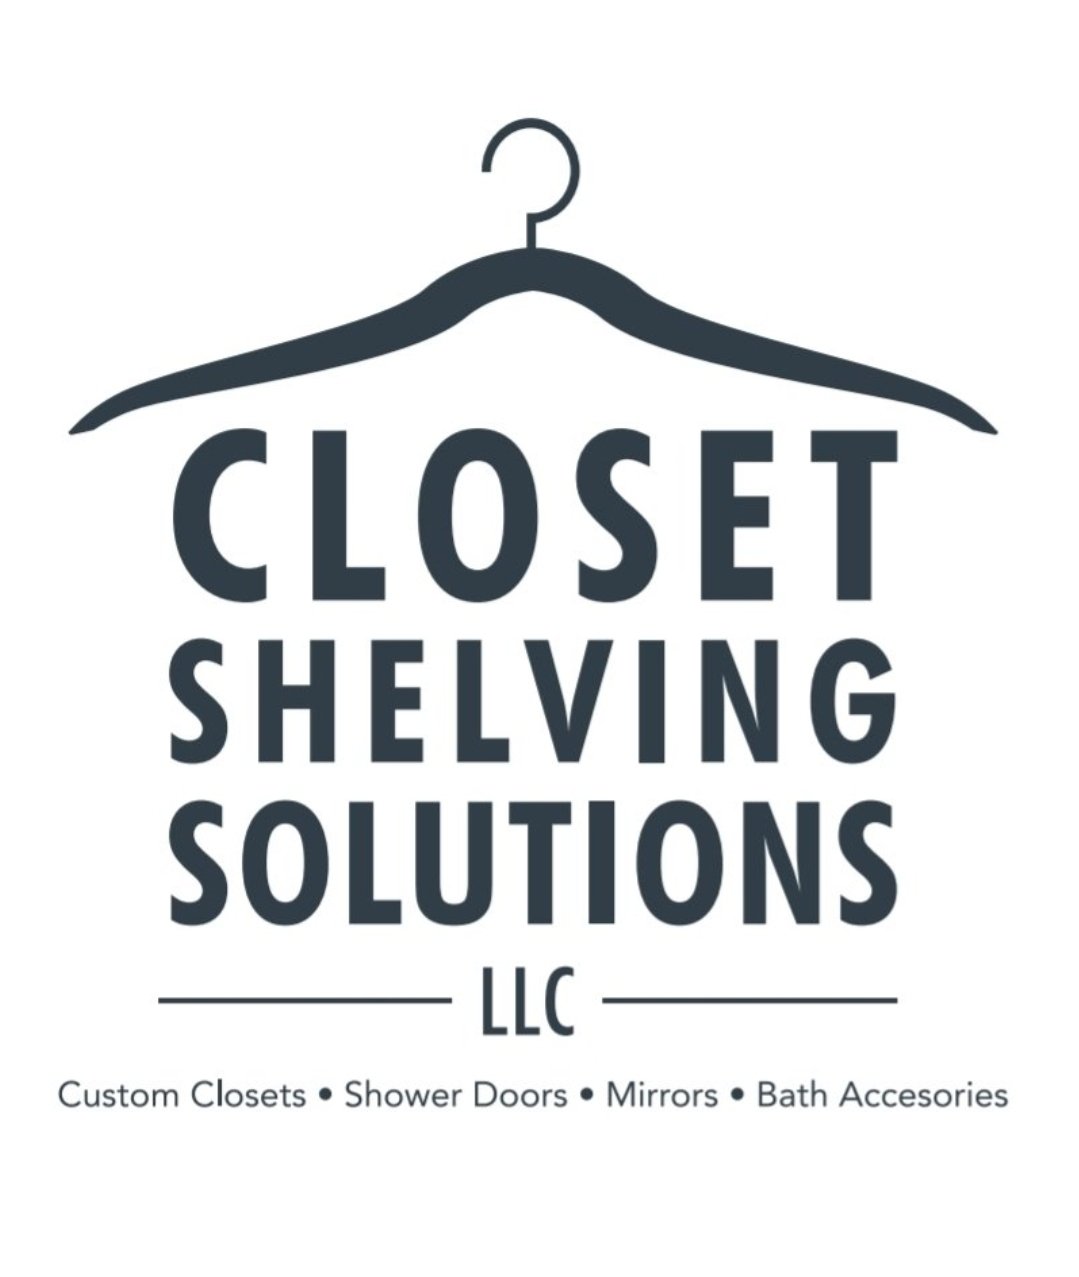 Closet Shelving Solutions